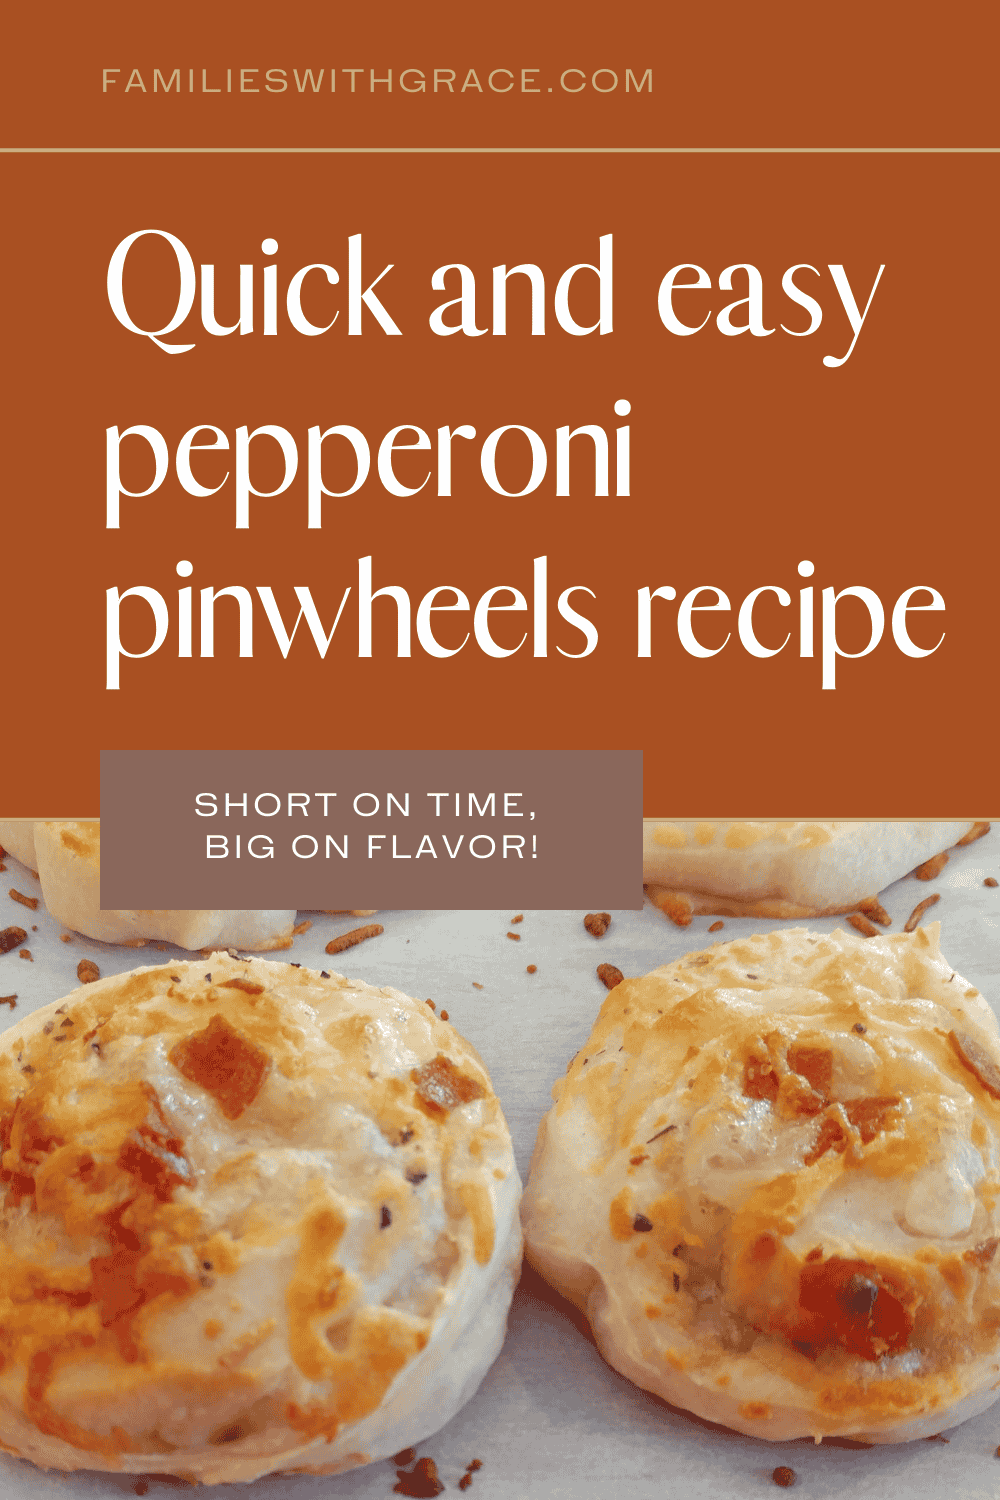 Quick & easy pepperoni pizza pinwheels recipe